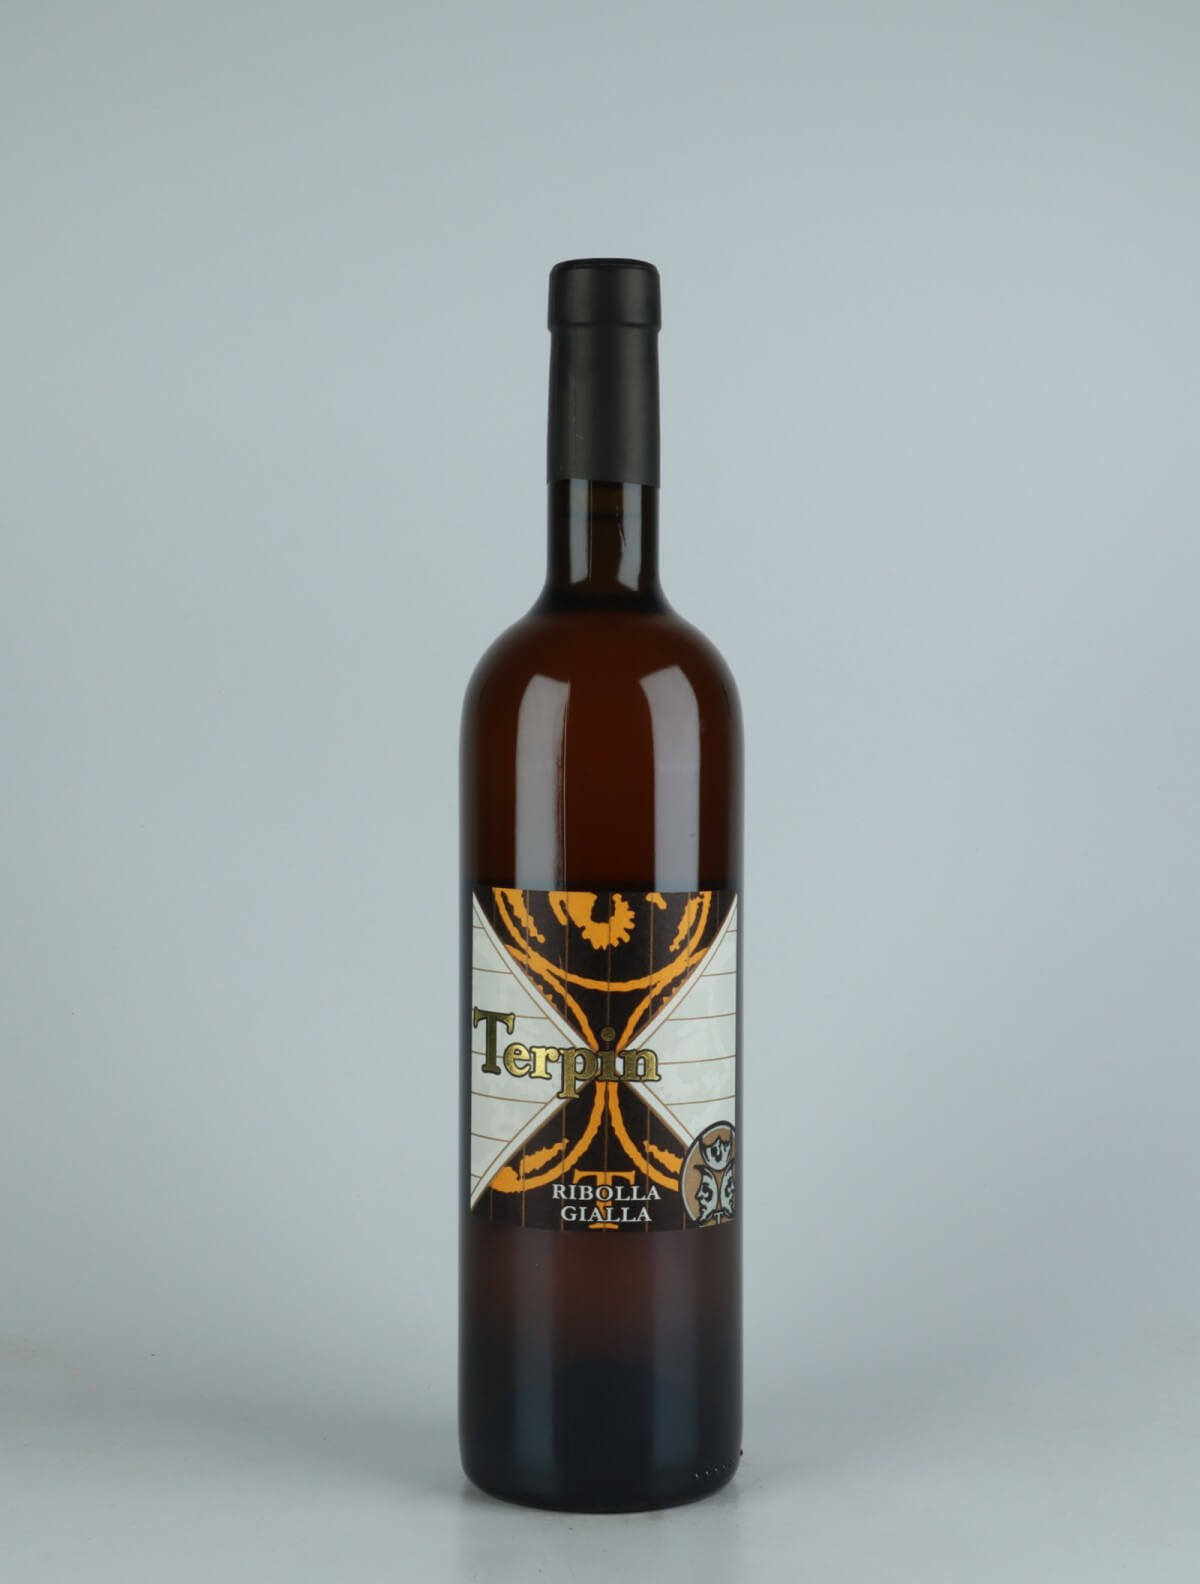 En flaske 2016 Ribolla Gialla Orange vin fra Franco Terpin, Friuli i Italien